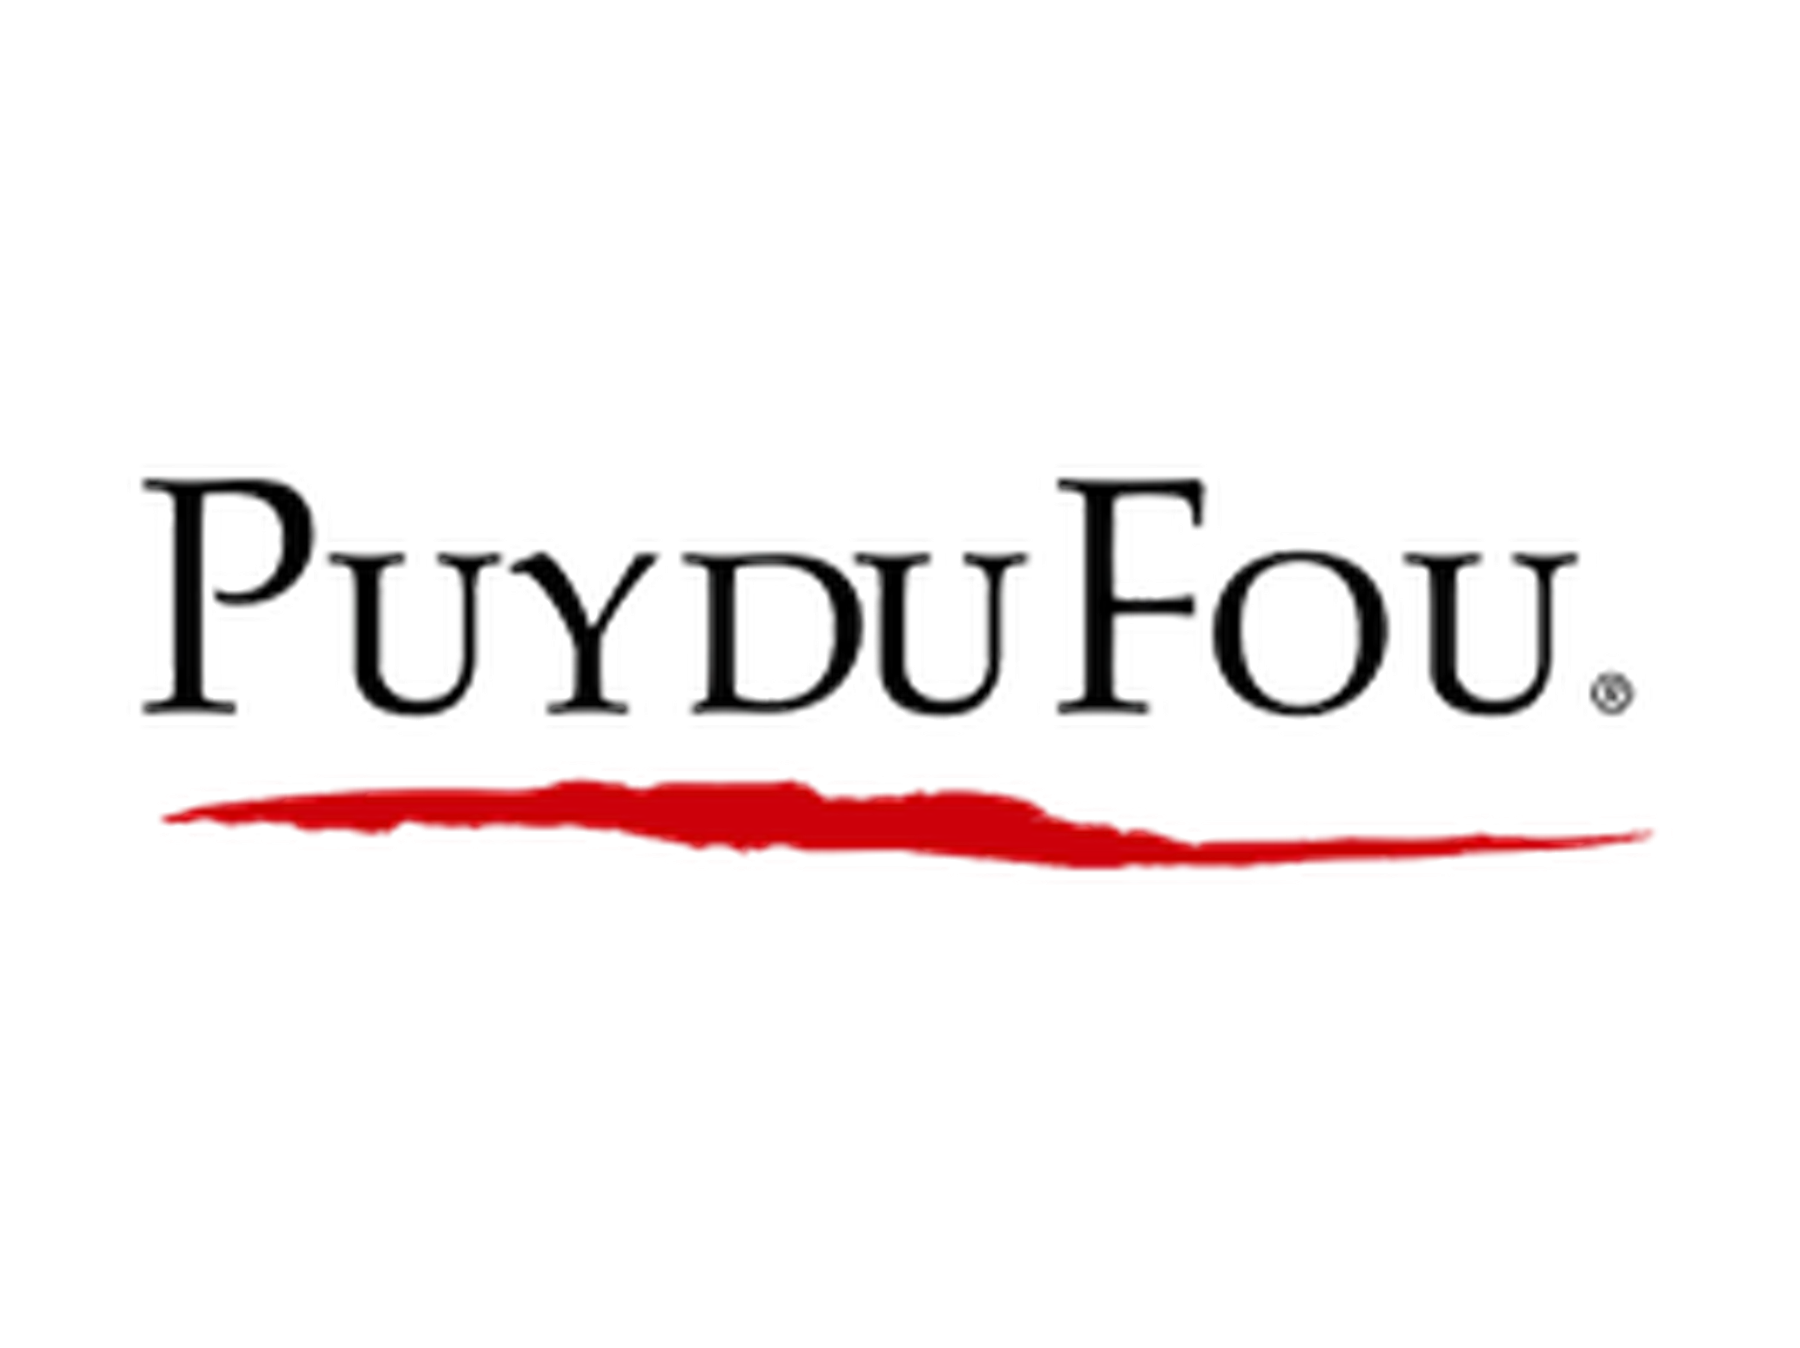 Code promo Puy du Fou